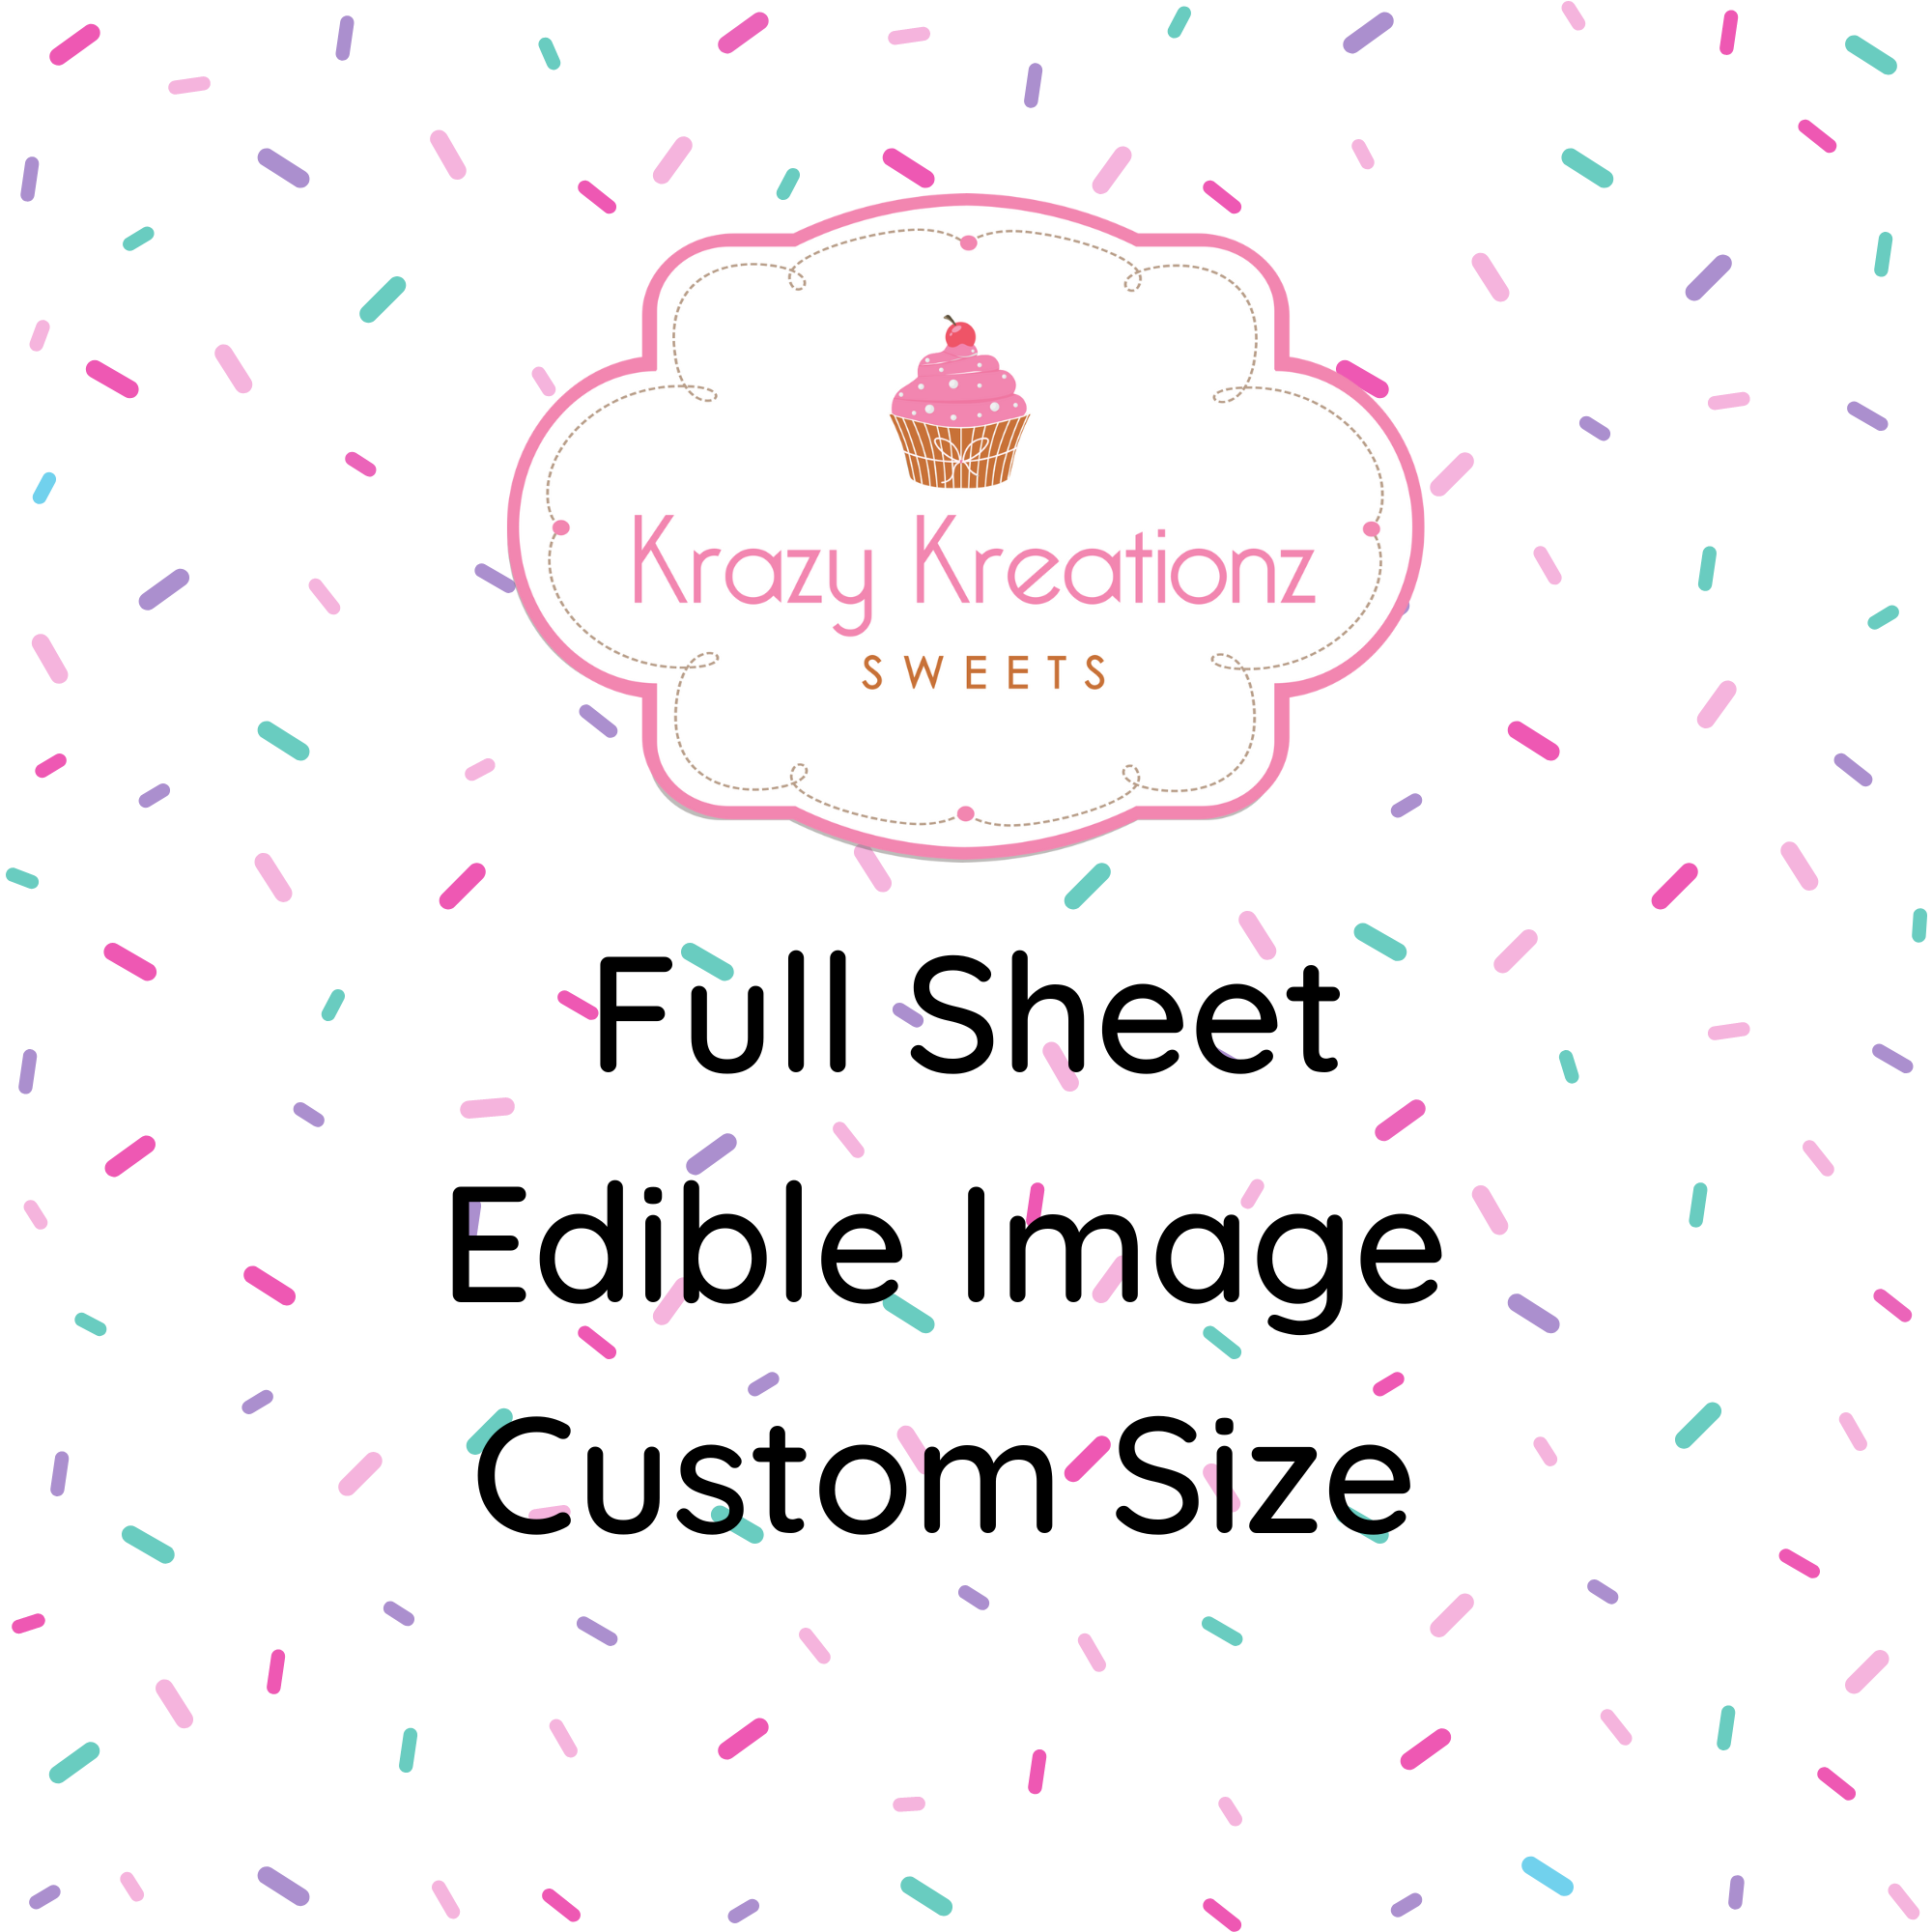 Full Sheet Custom Size Edible Image